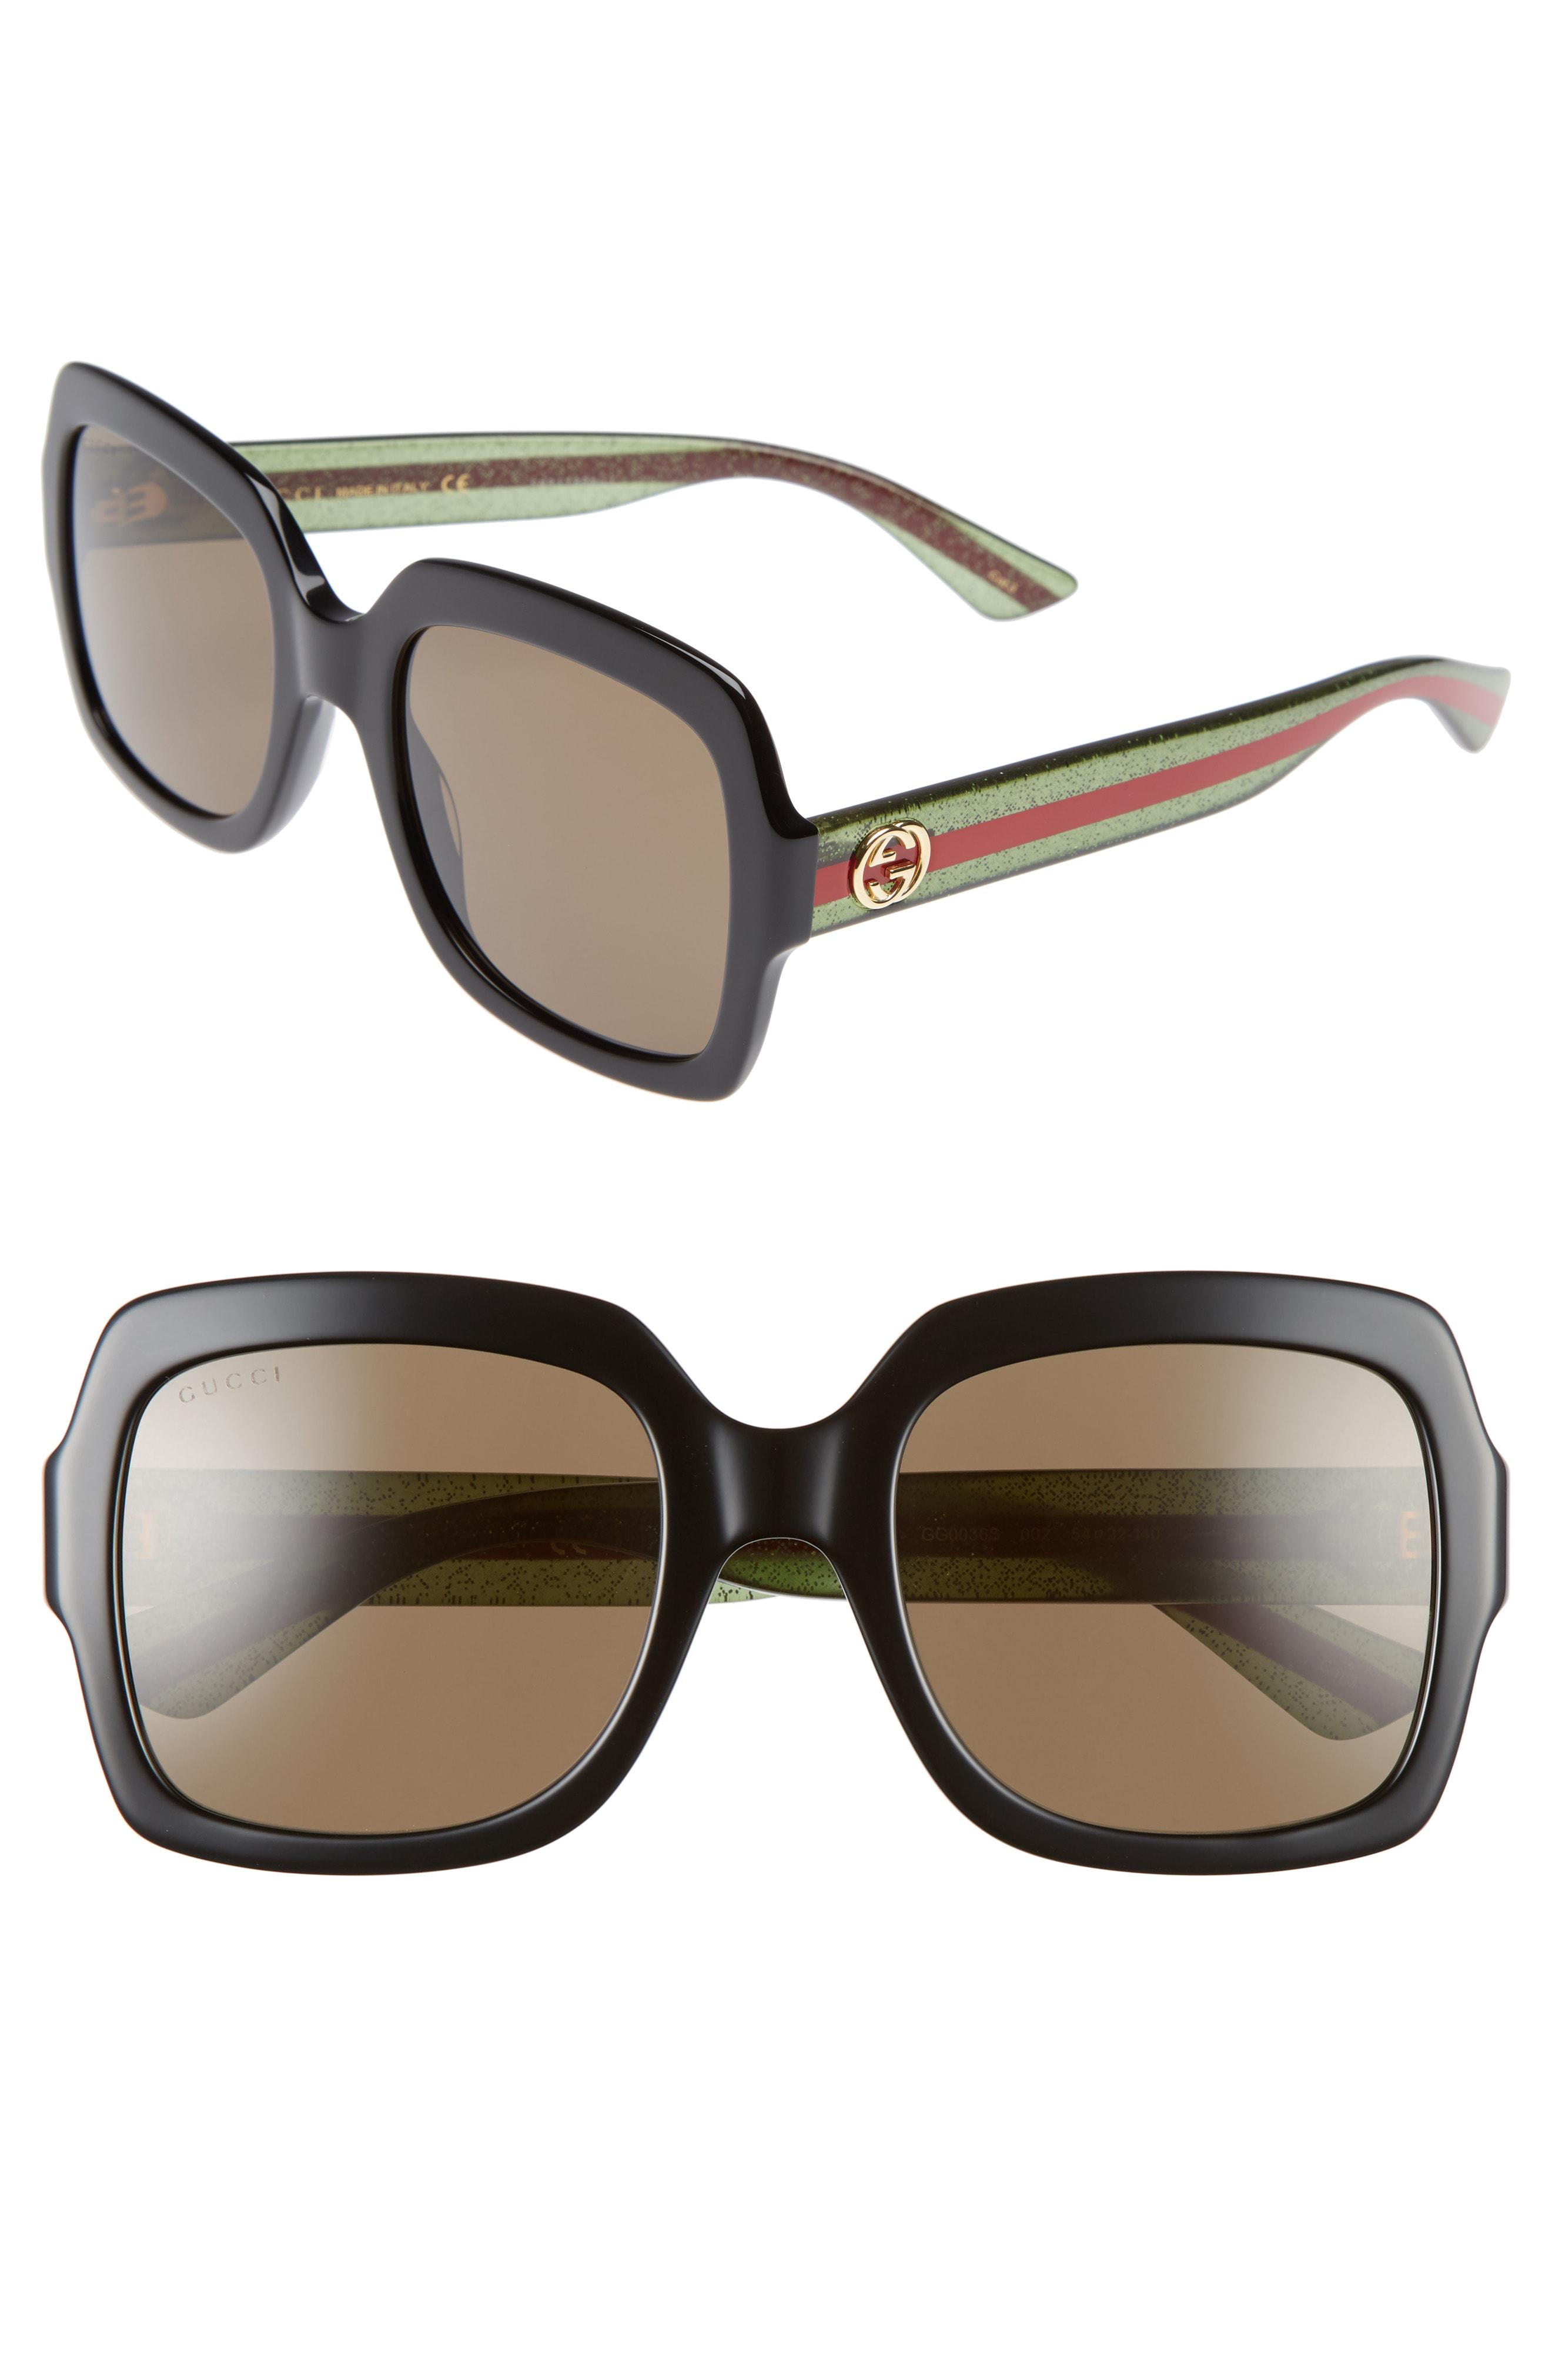 Lyst - Gucci 54mm Square Sunglasses - in Brown